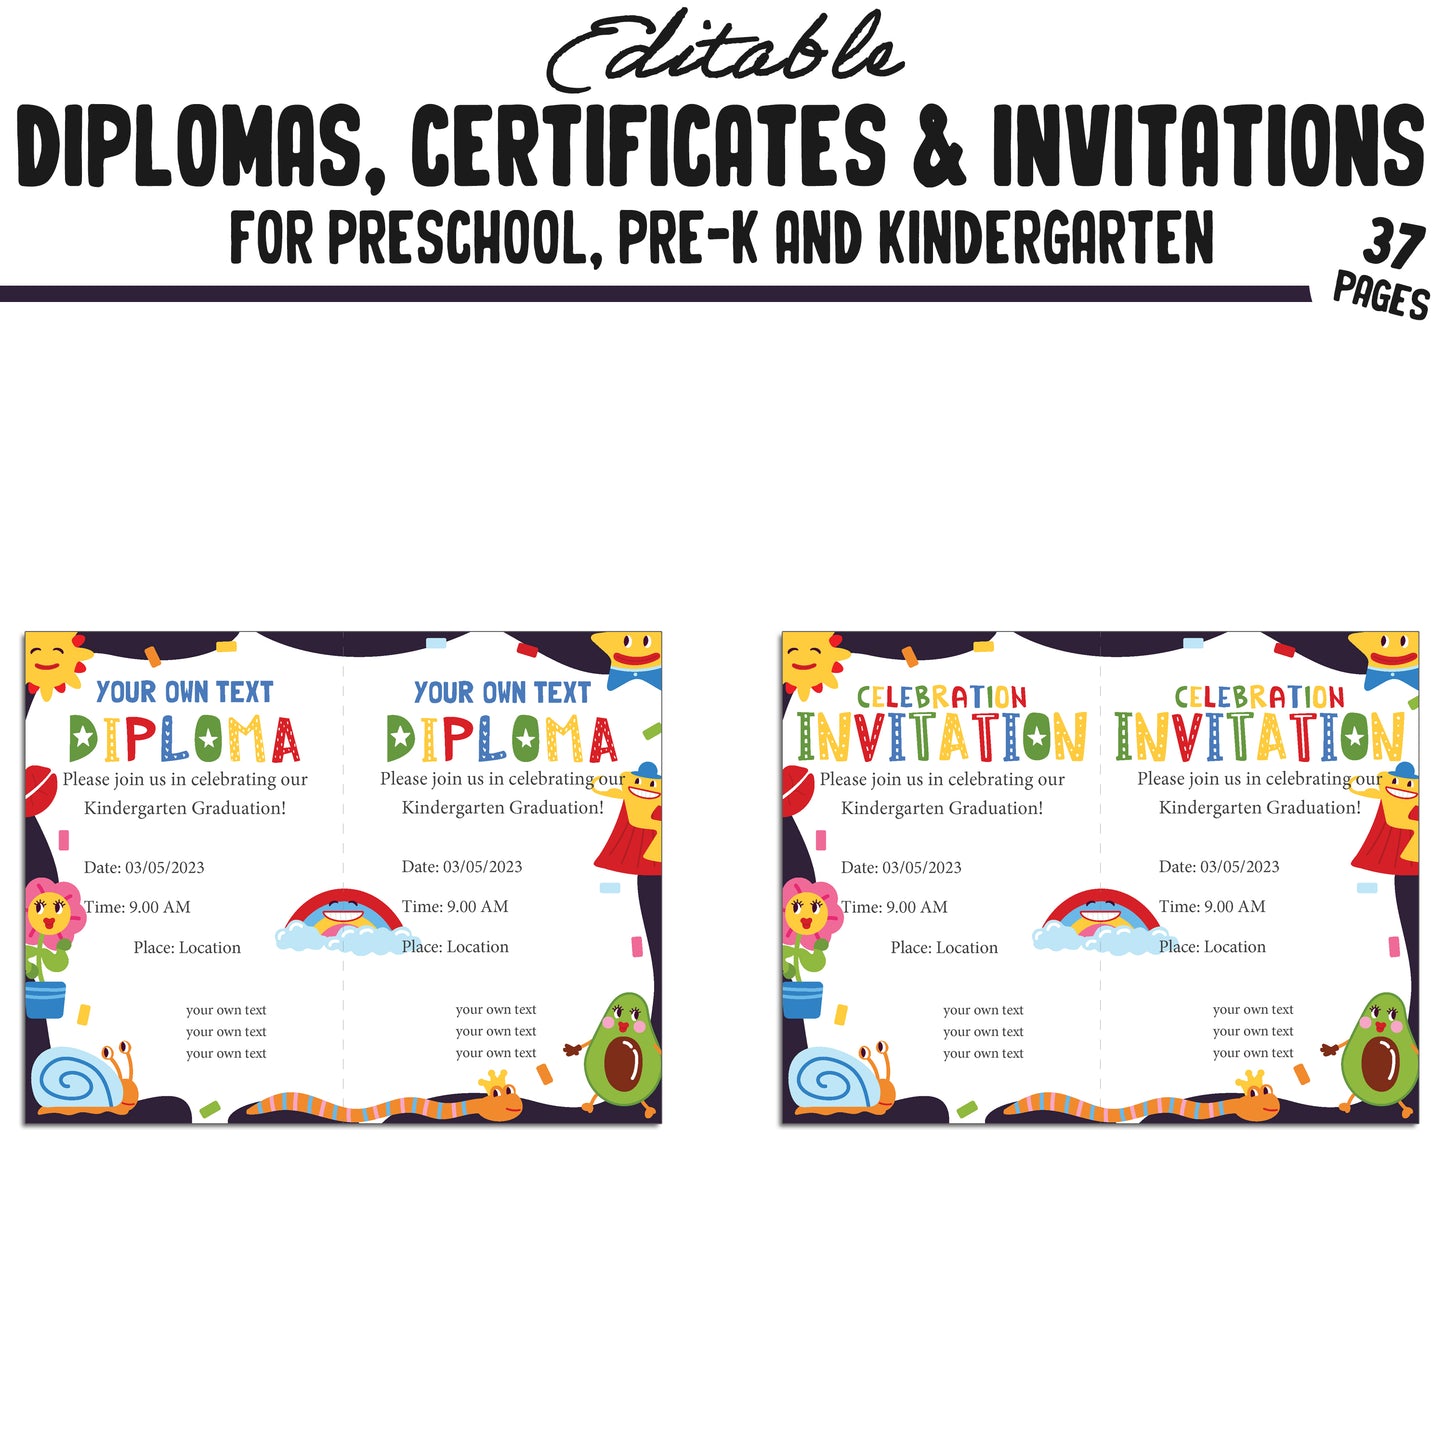 37 Printable Pre-K, Kindergarten, and Preschool Diplomas, Certificates, and Invitation Templates (PDF Files) - Instant Download